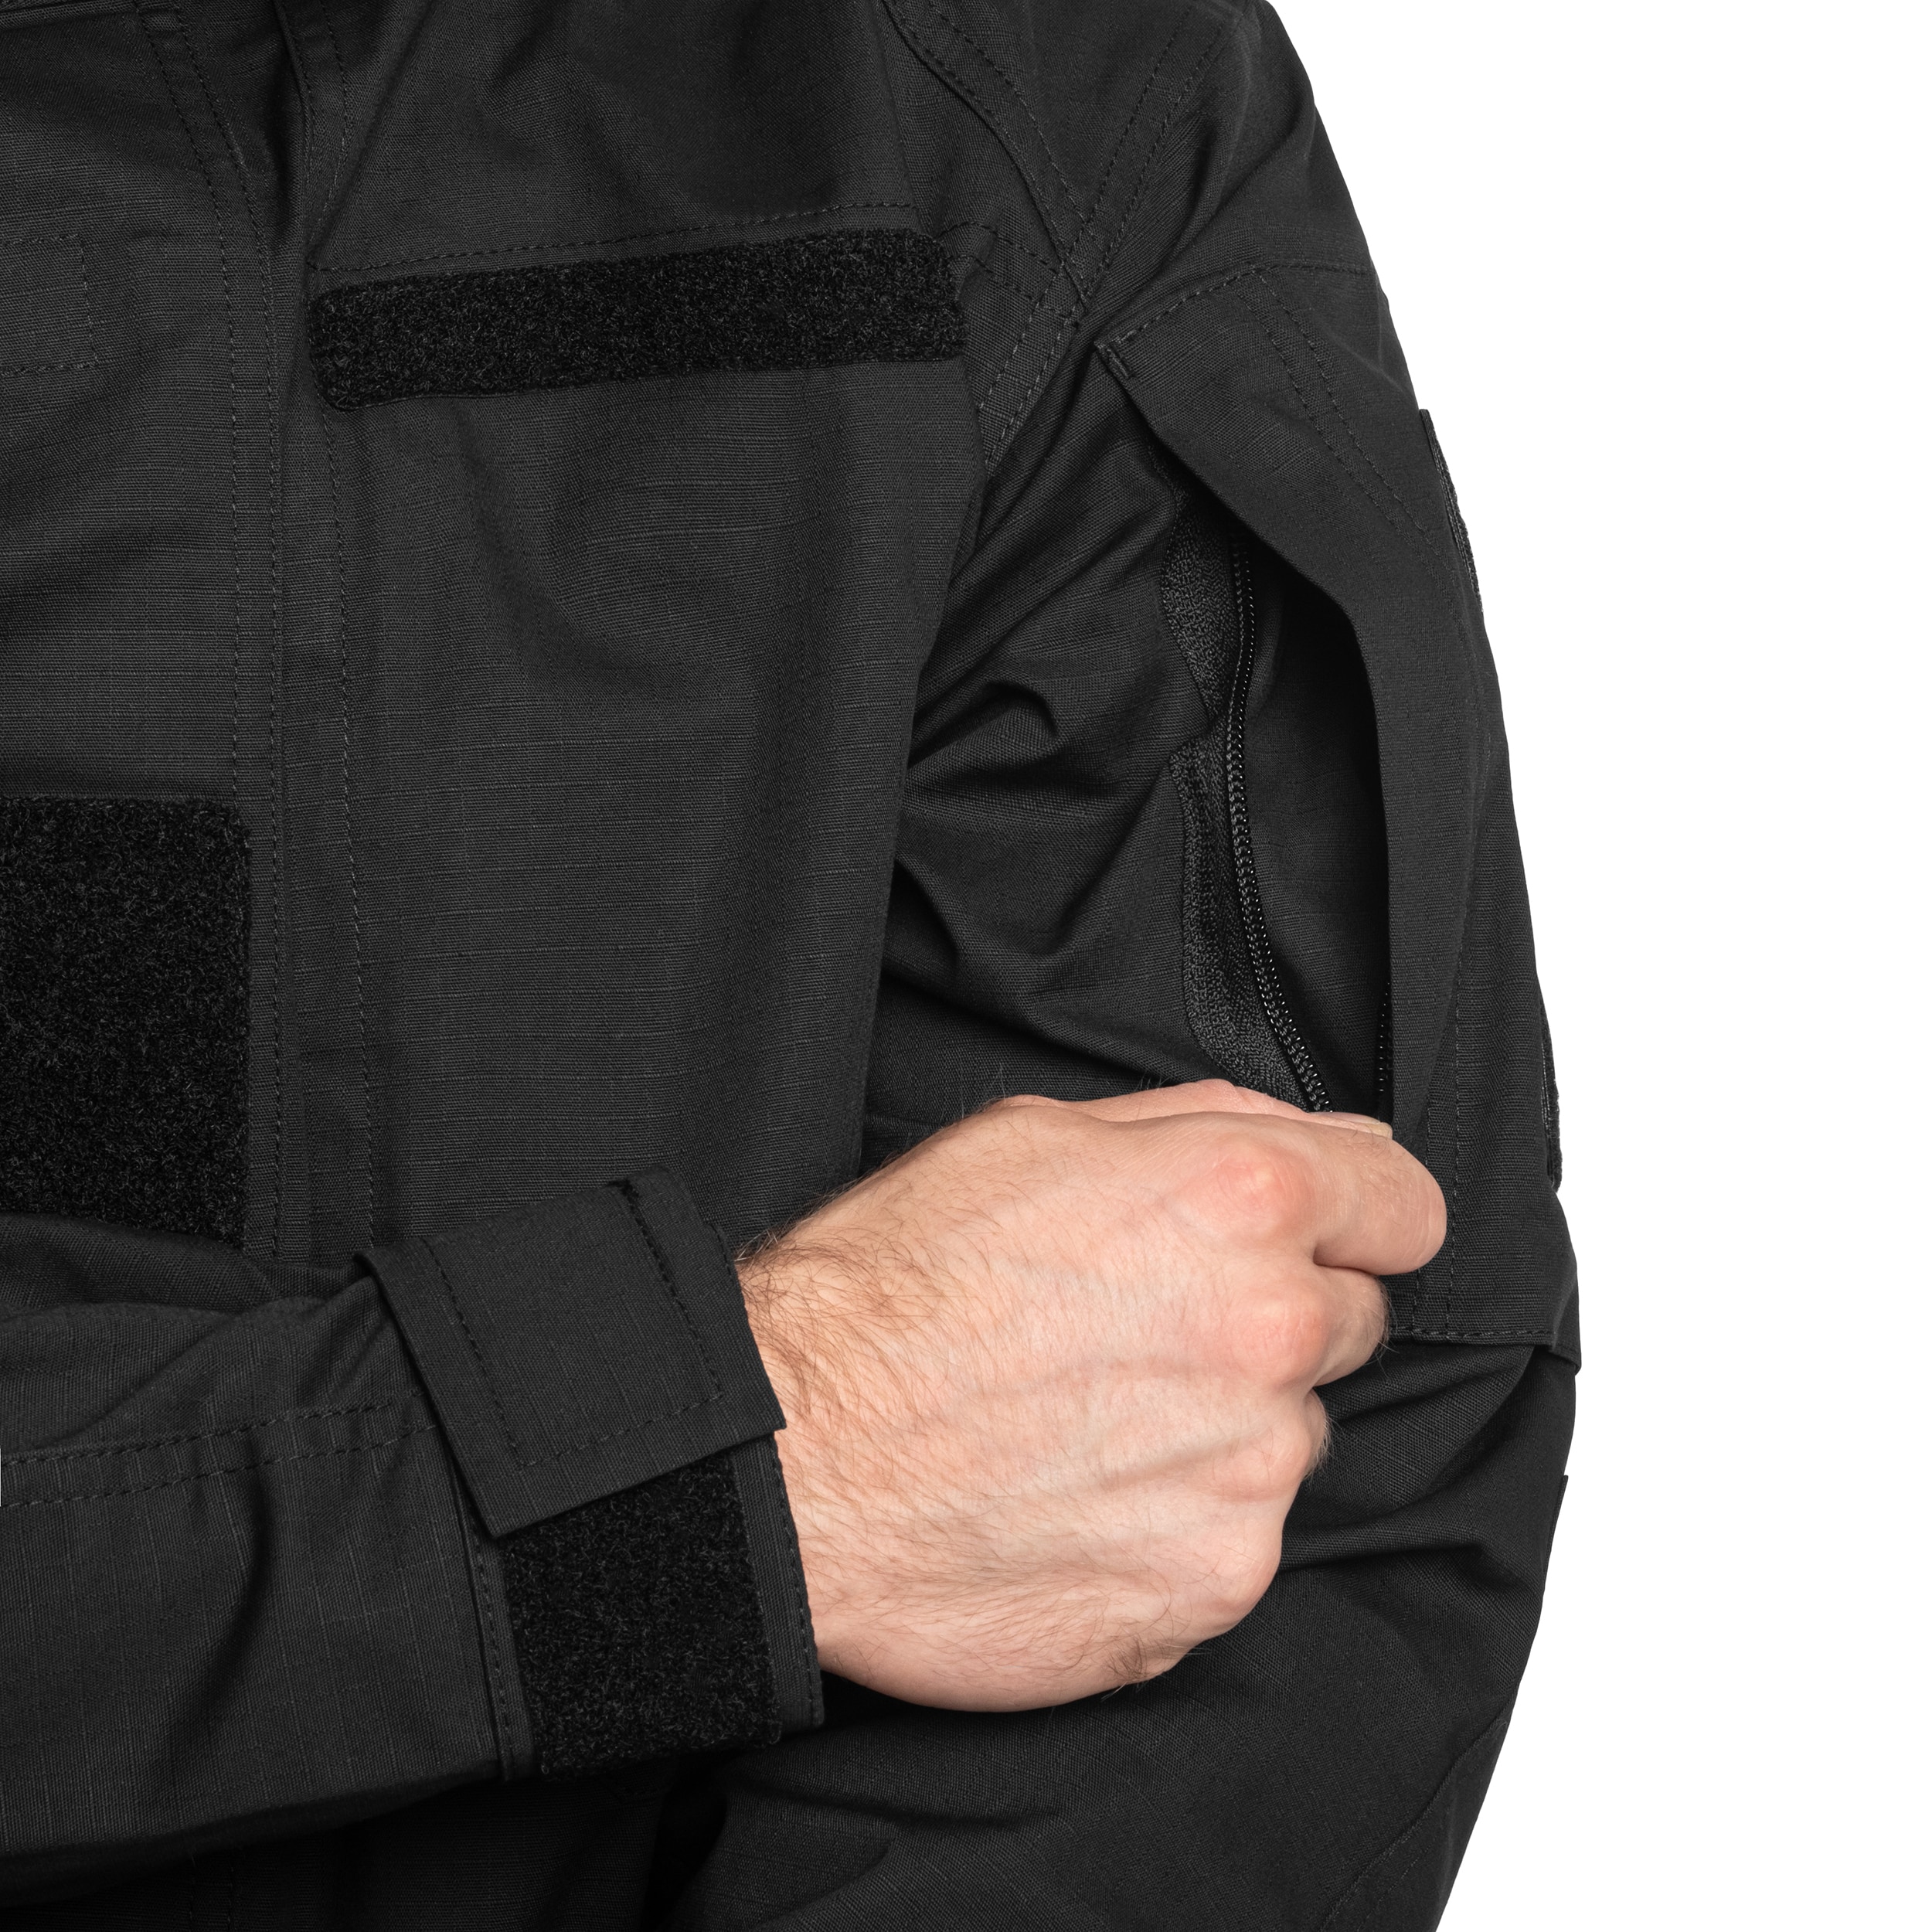 Bluza mundurowa M-Tac Patrol Flex - Black